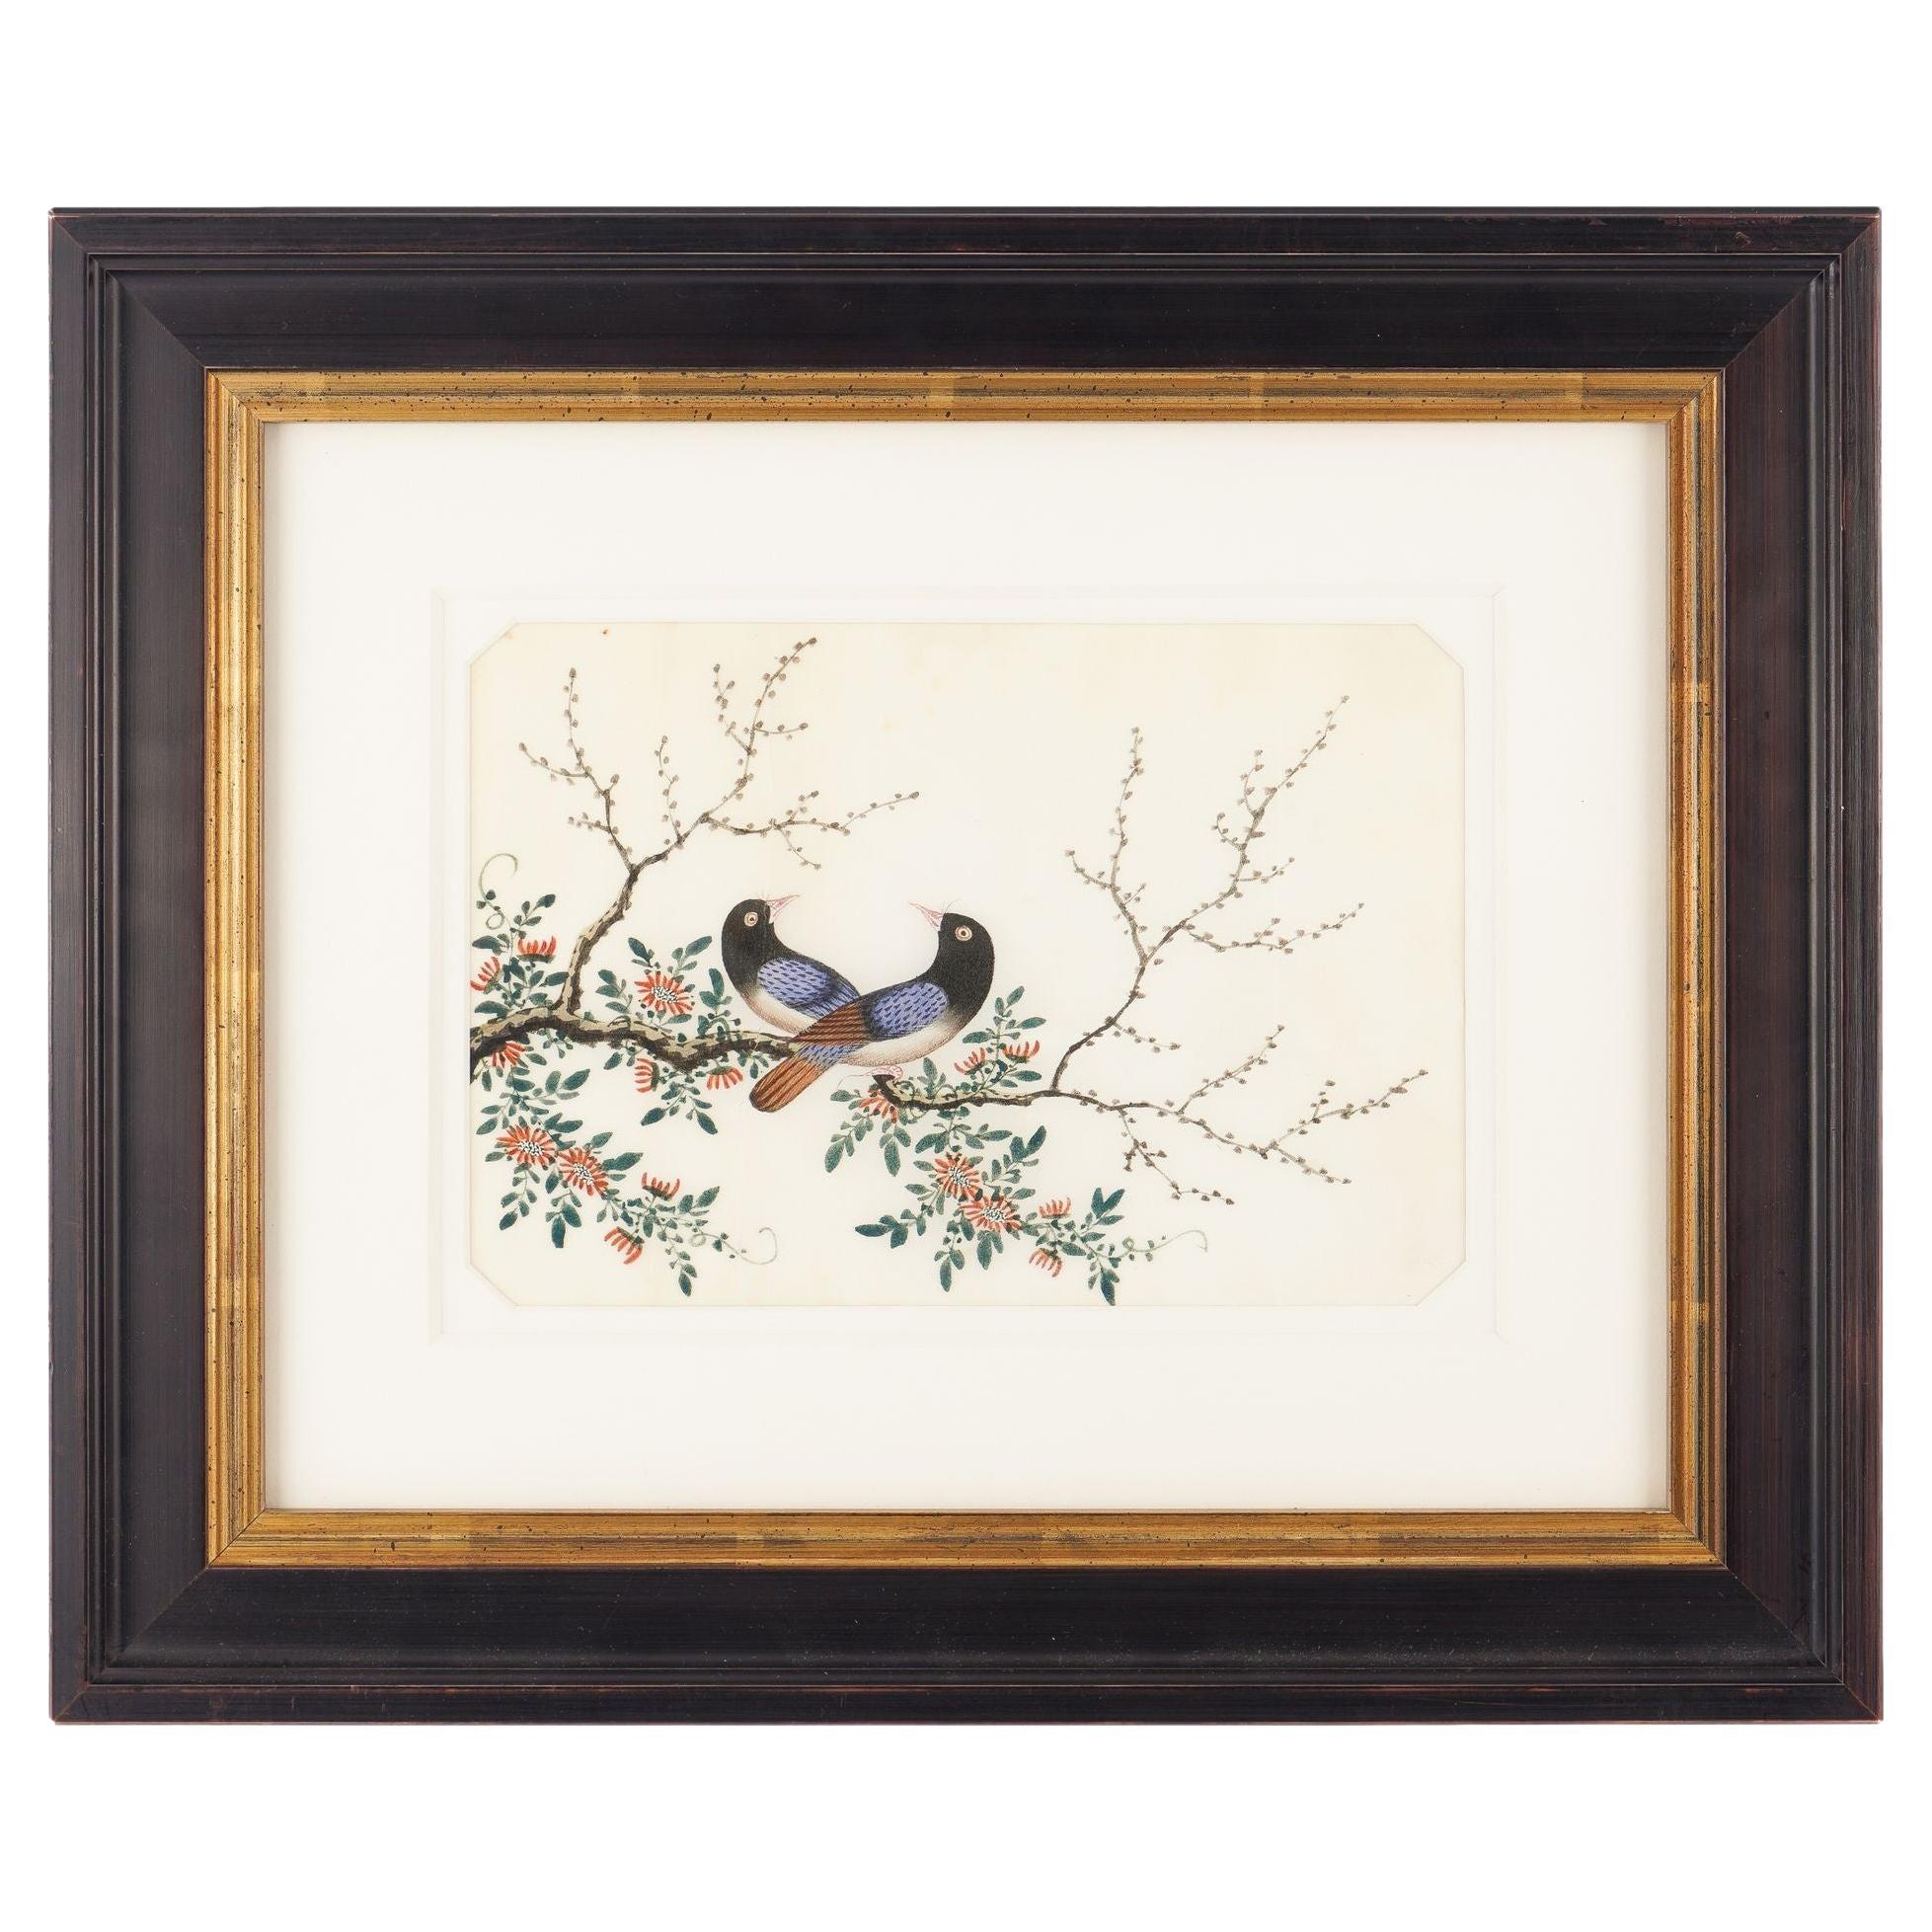 Chinese ornithological painting on rice paper, c. 1830